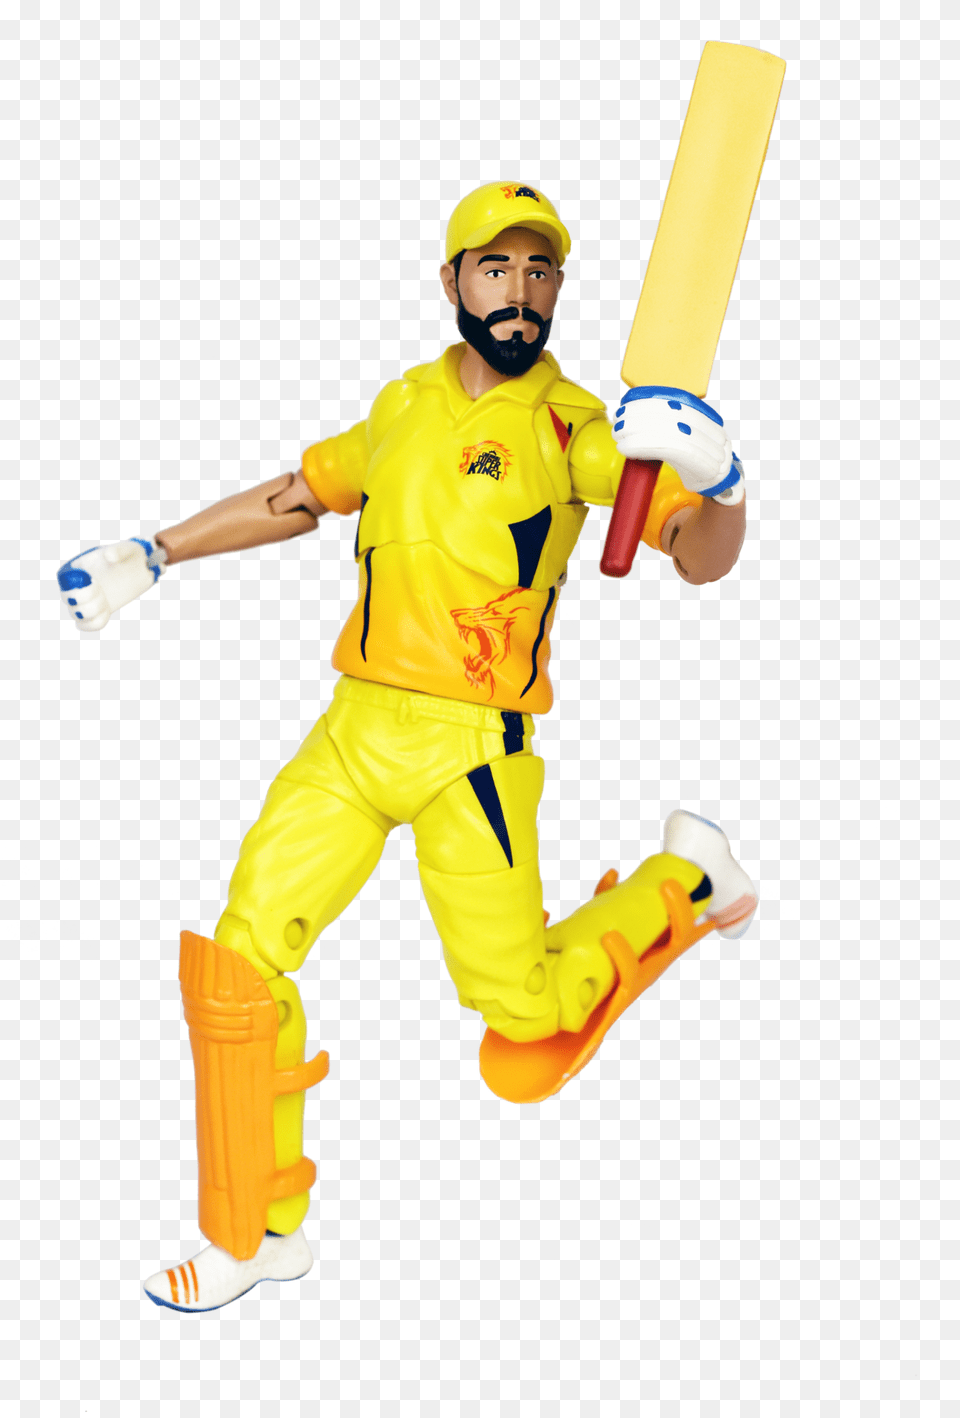 Cricket Batsman Action Figure, Person, People, Helmet, Glove Free Transparent Png